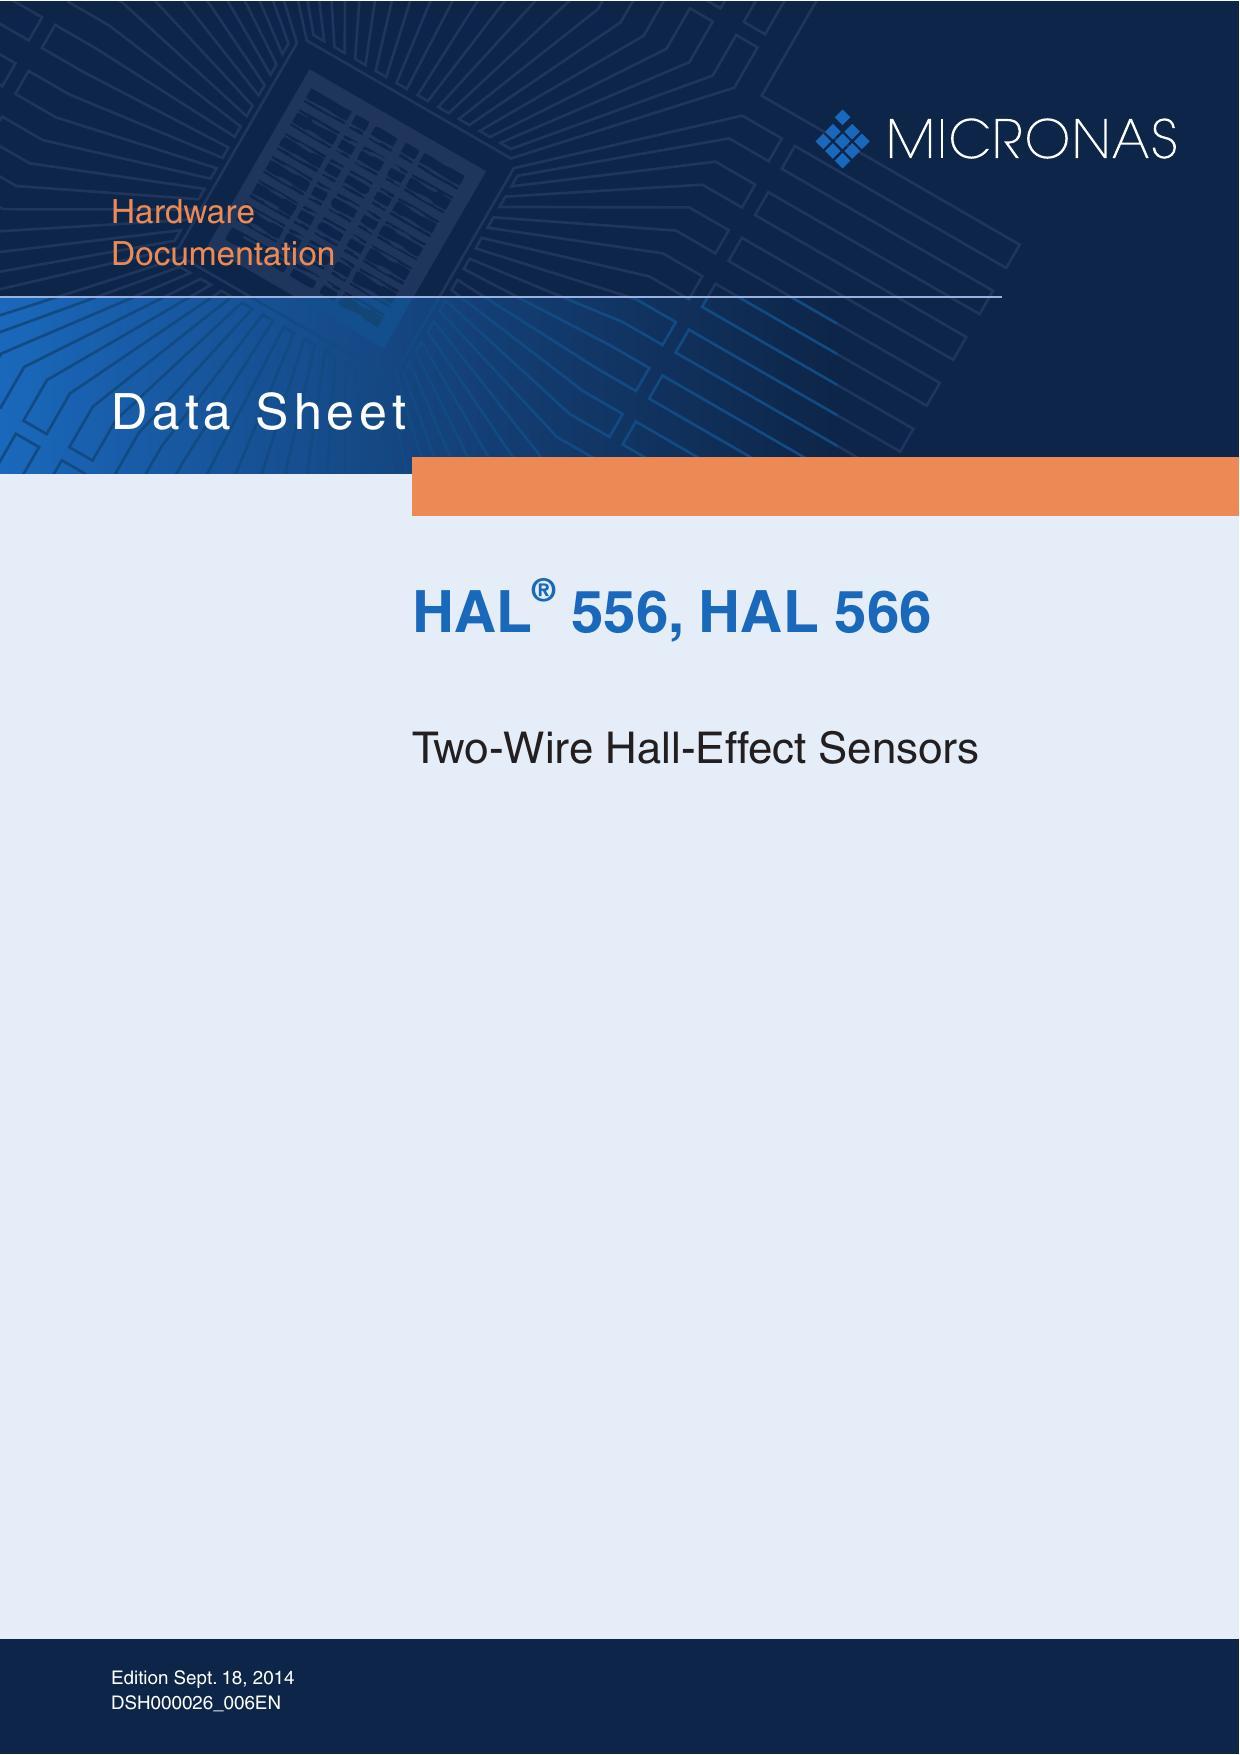 micronas-hal-556-hal-566-two-wire-hall-effect-sensors.pdf